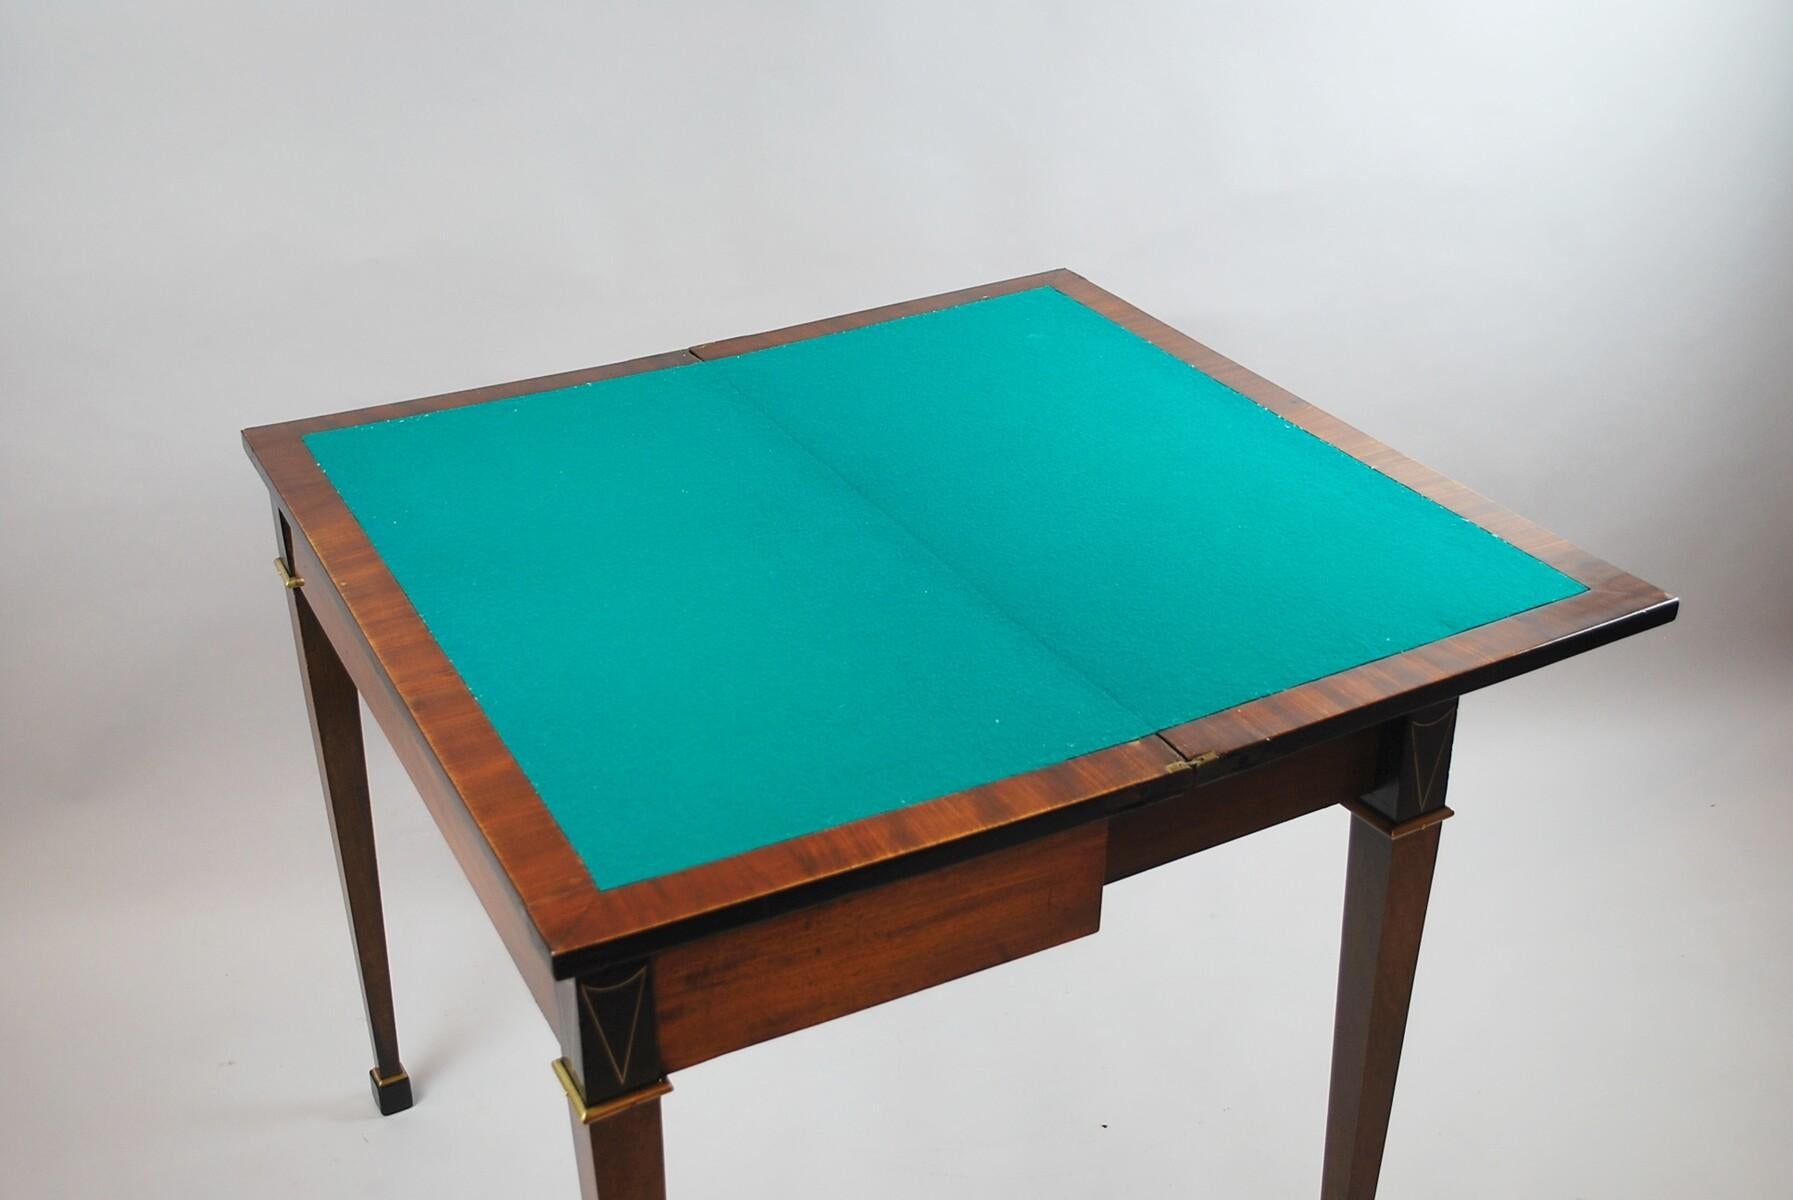 Directoire Period Game Table - c.18th century